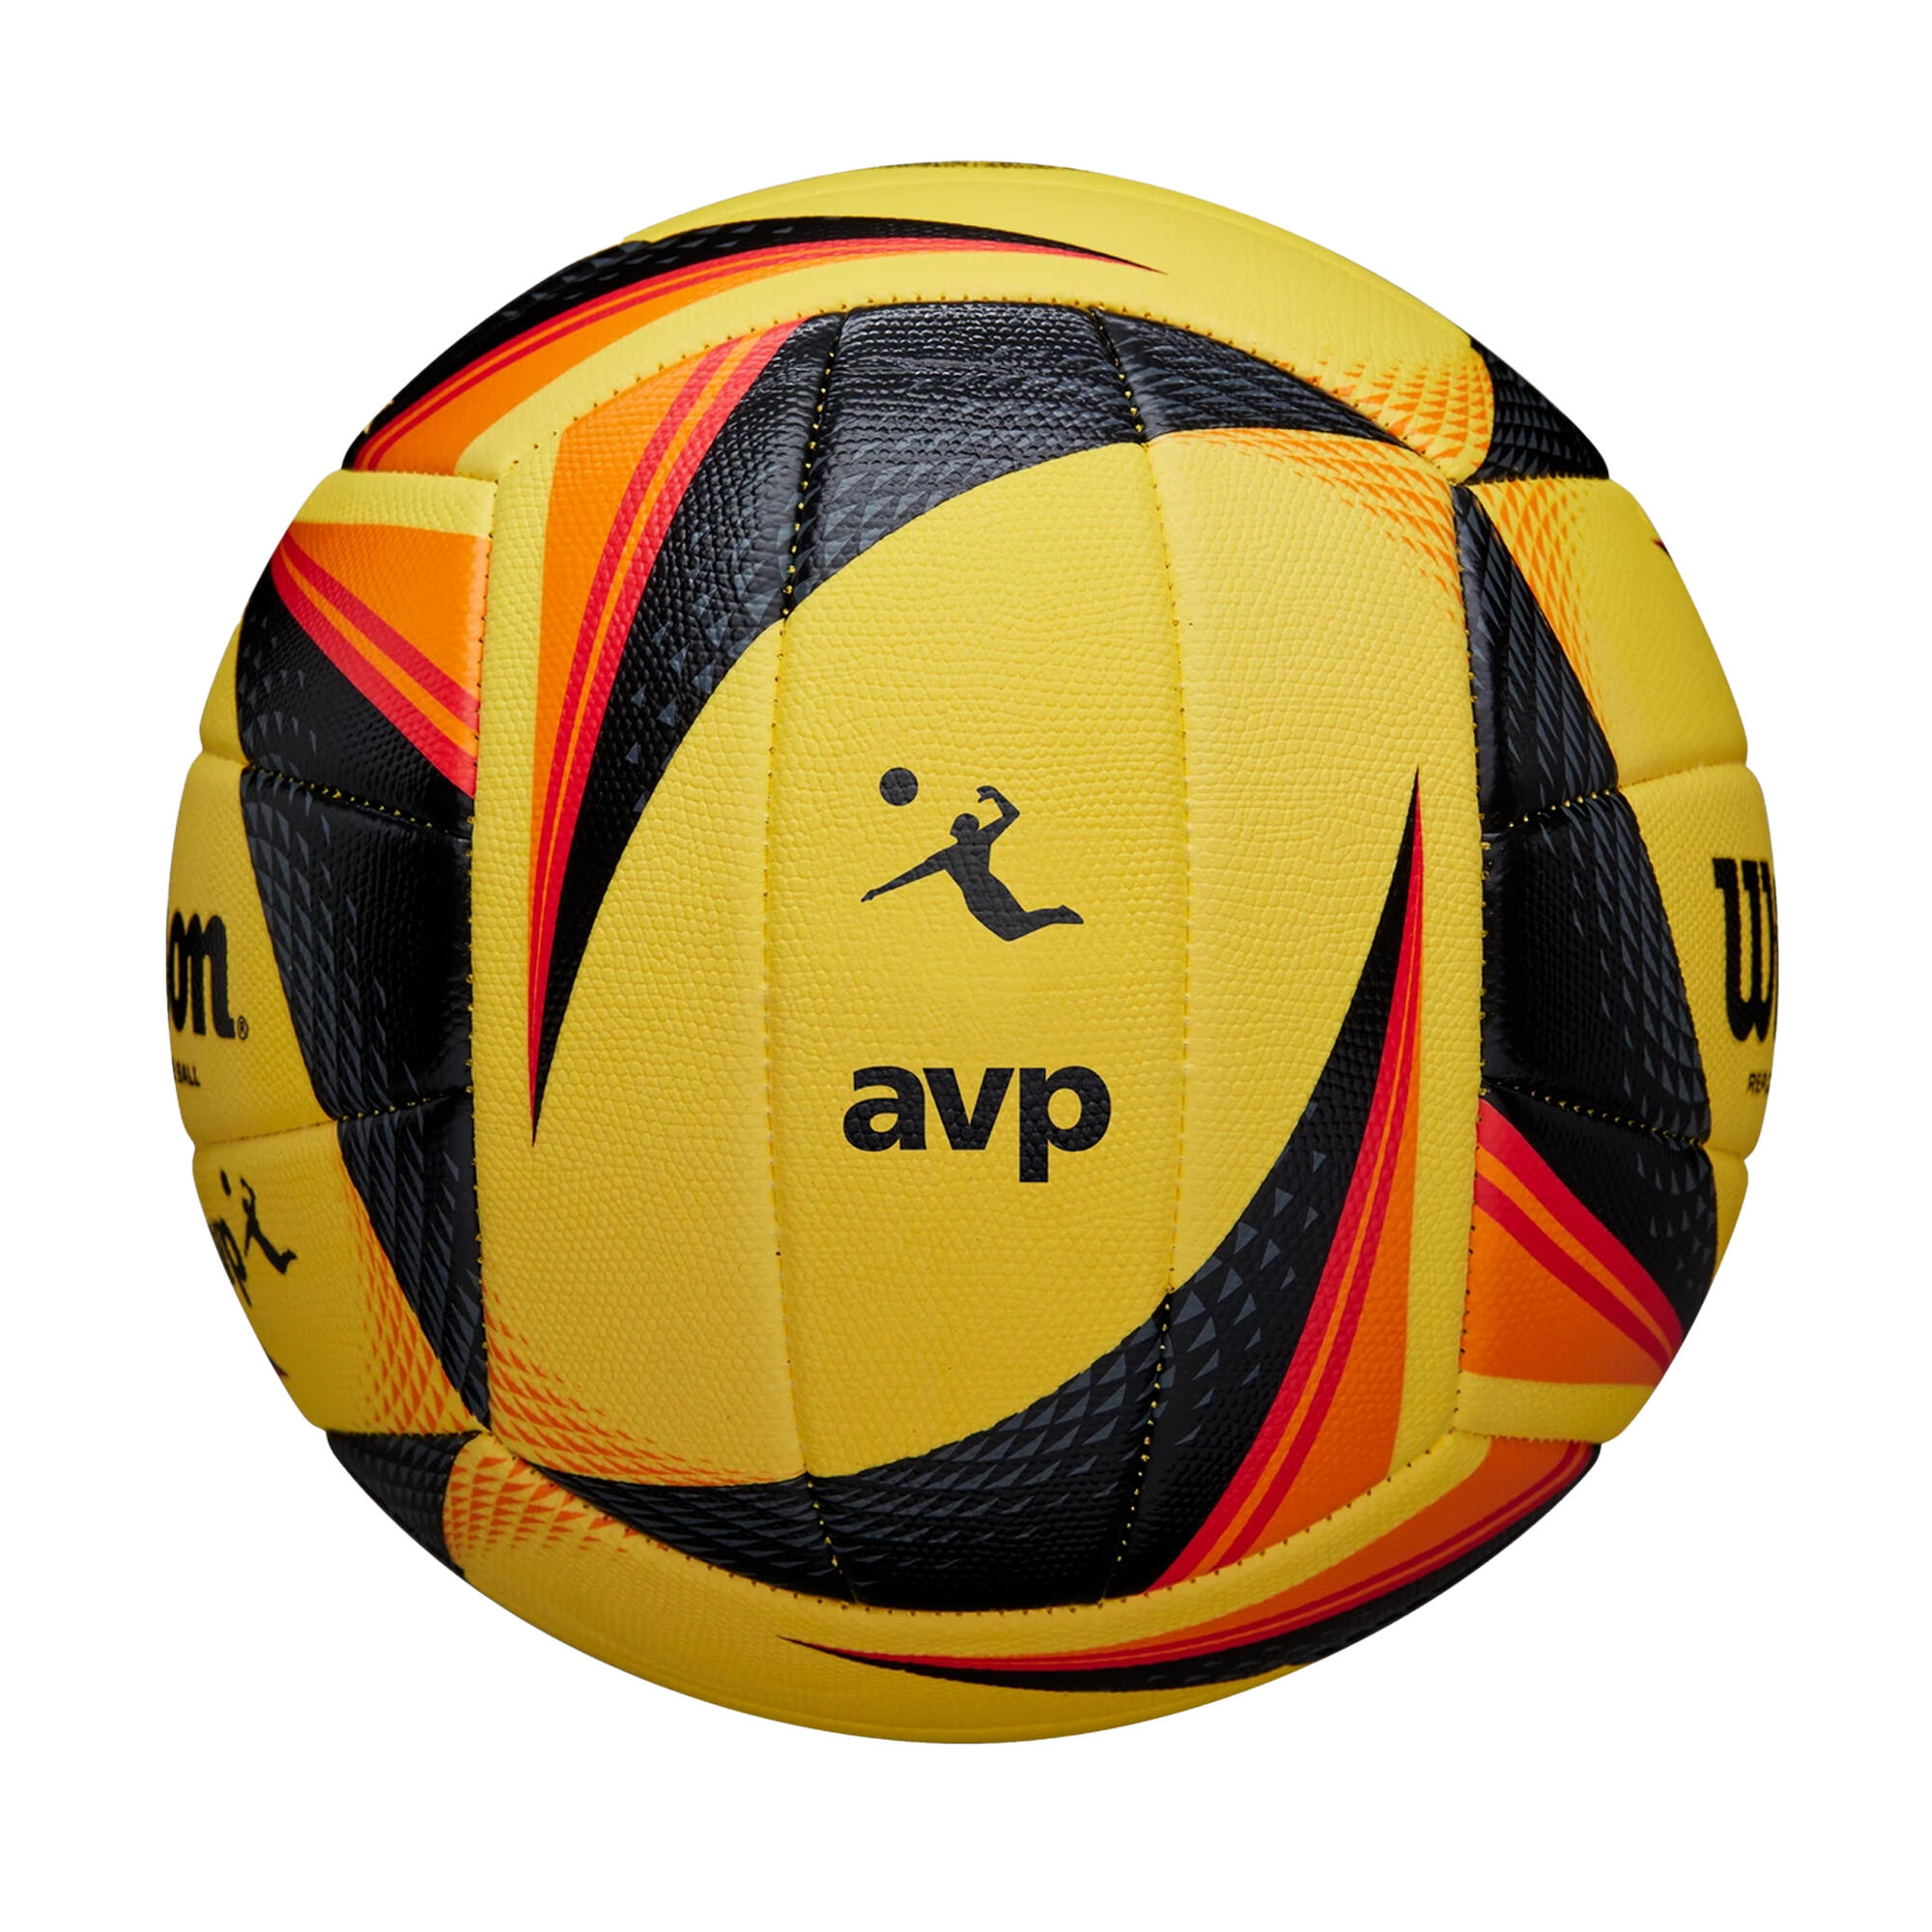 OPTX Replica AVP Volleyball (Yellow/Black/Red) 2/3